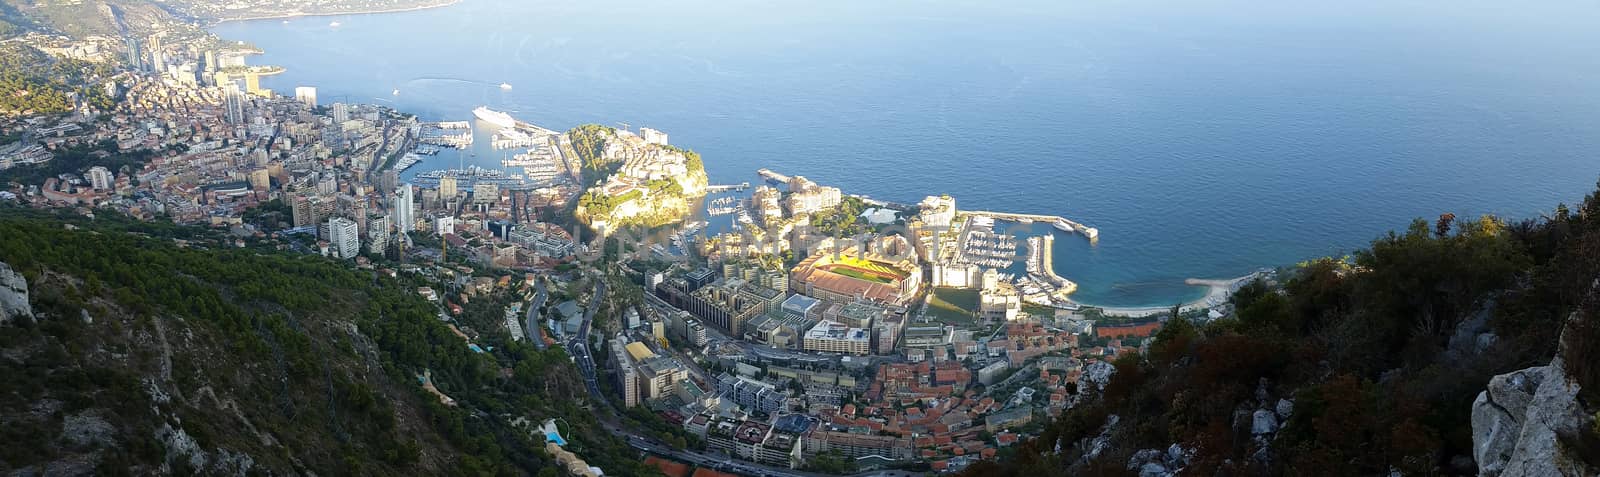 Beautiful Panoramic View of the Principality of Monaco and the Mediterranean Sea